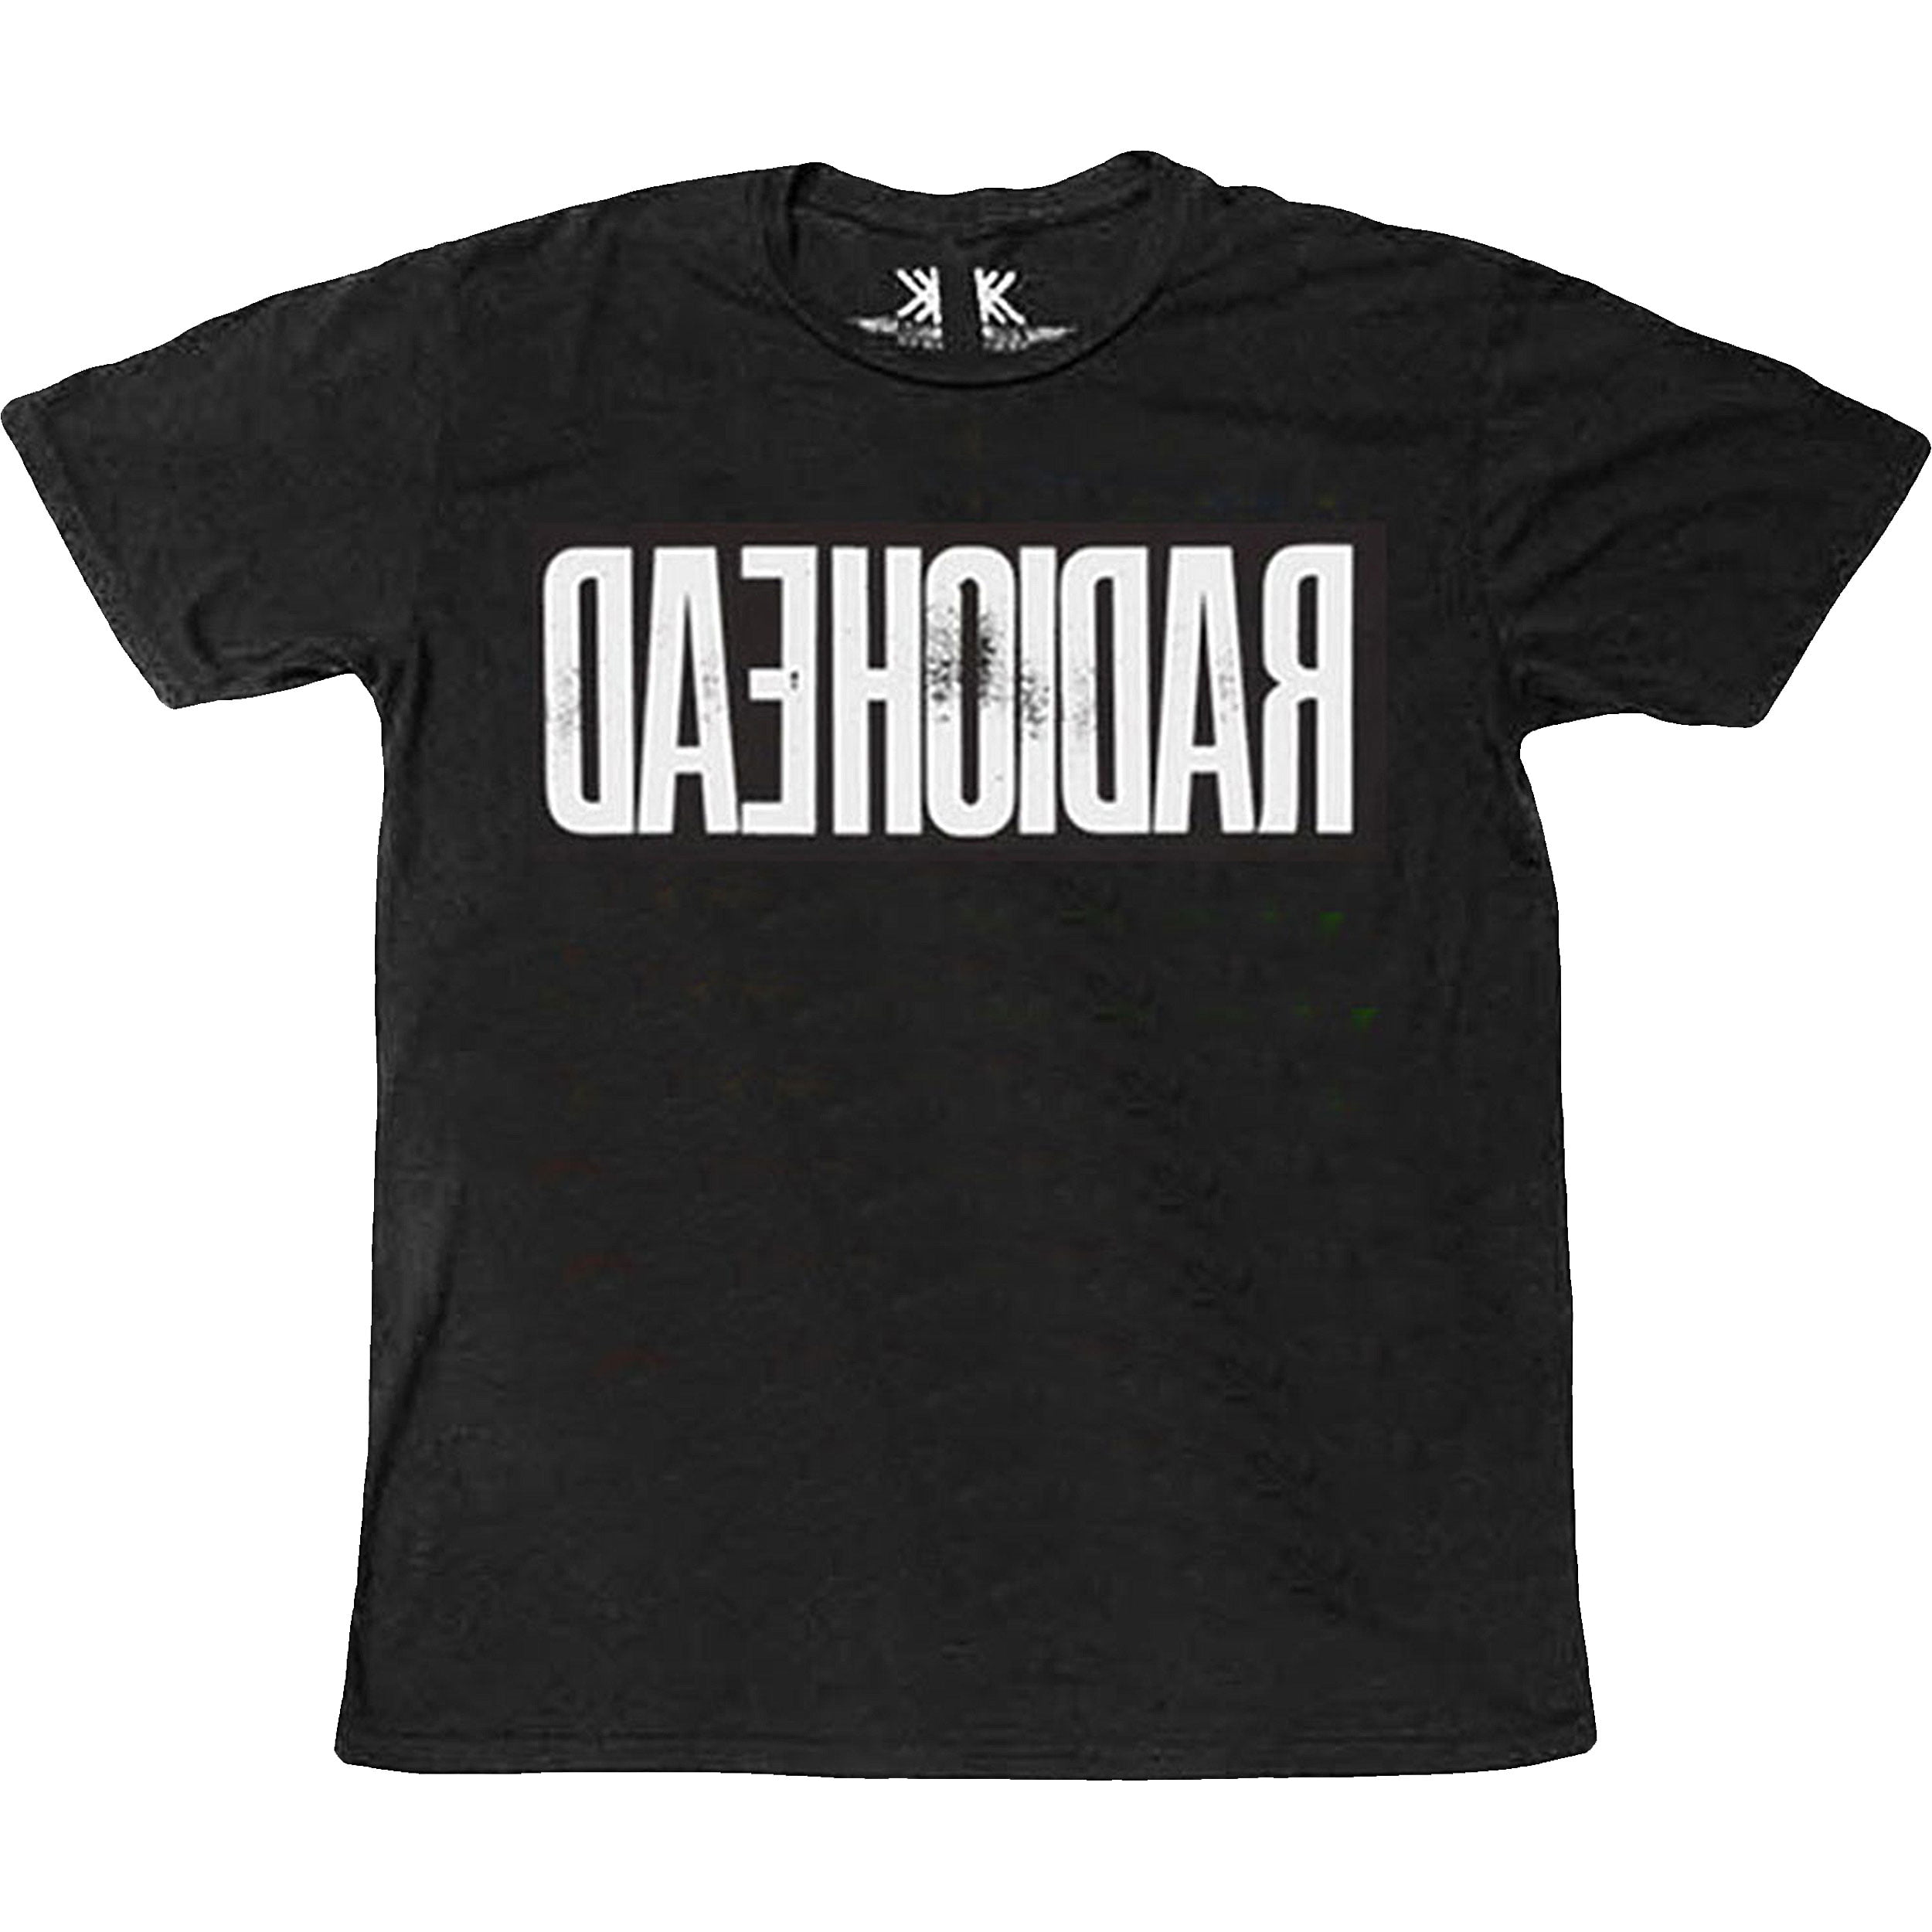 Band Shirt Radiohead Vintage Shirt Vintage Clothing Gift For Her HA Radiohead T-Shirt Gift For Him Radiohead Tee RADIOHEAD Shirt